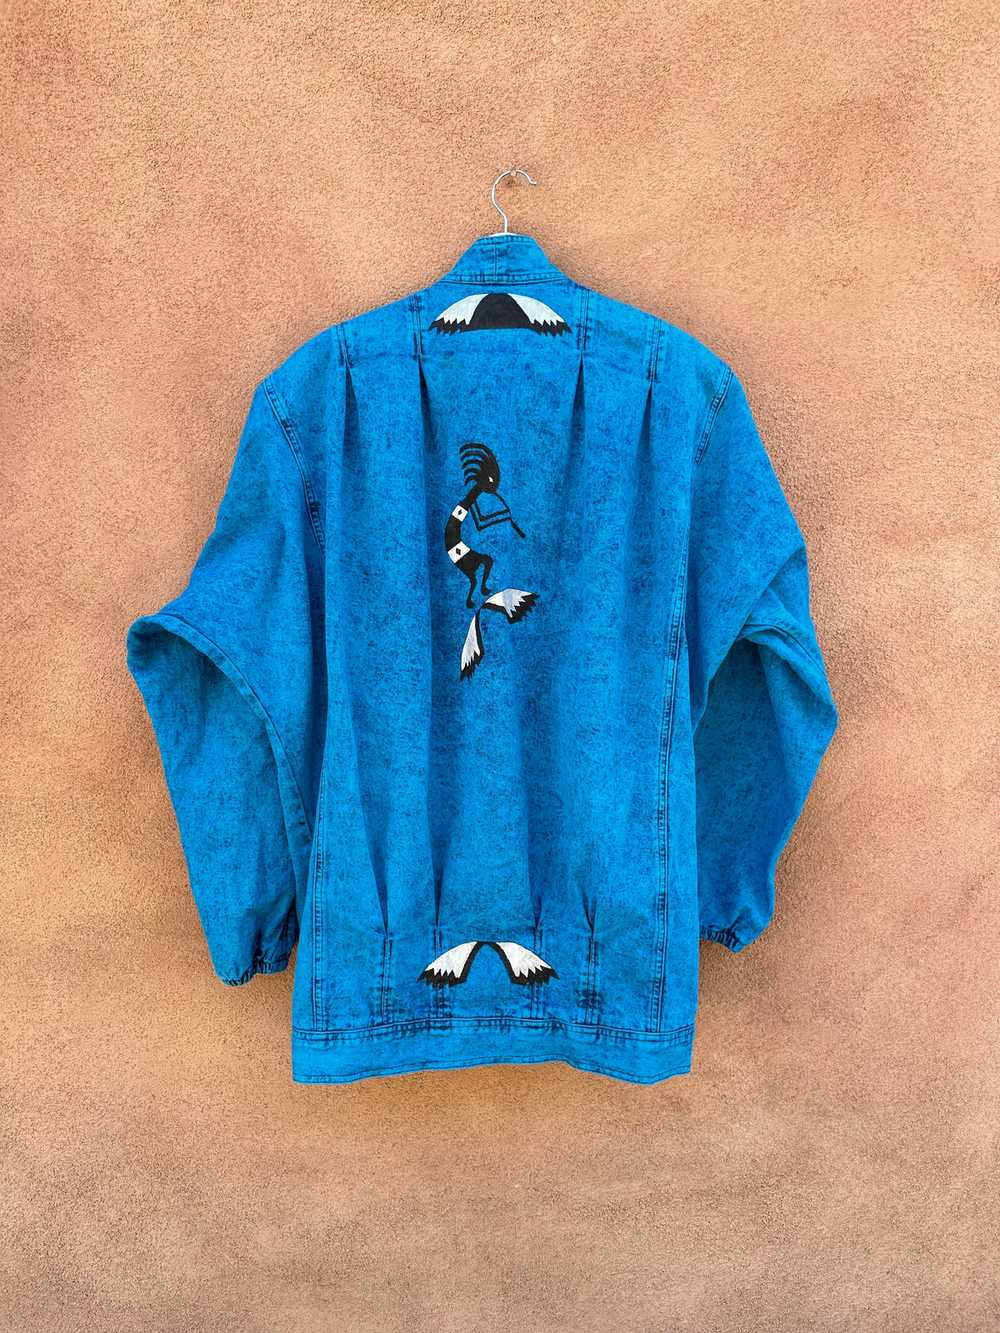 Kokopelli Blue Santa Fe Style Denim Jacket by MJR - image 1